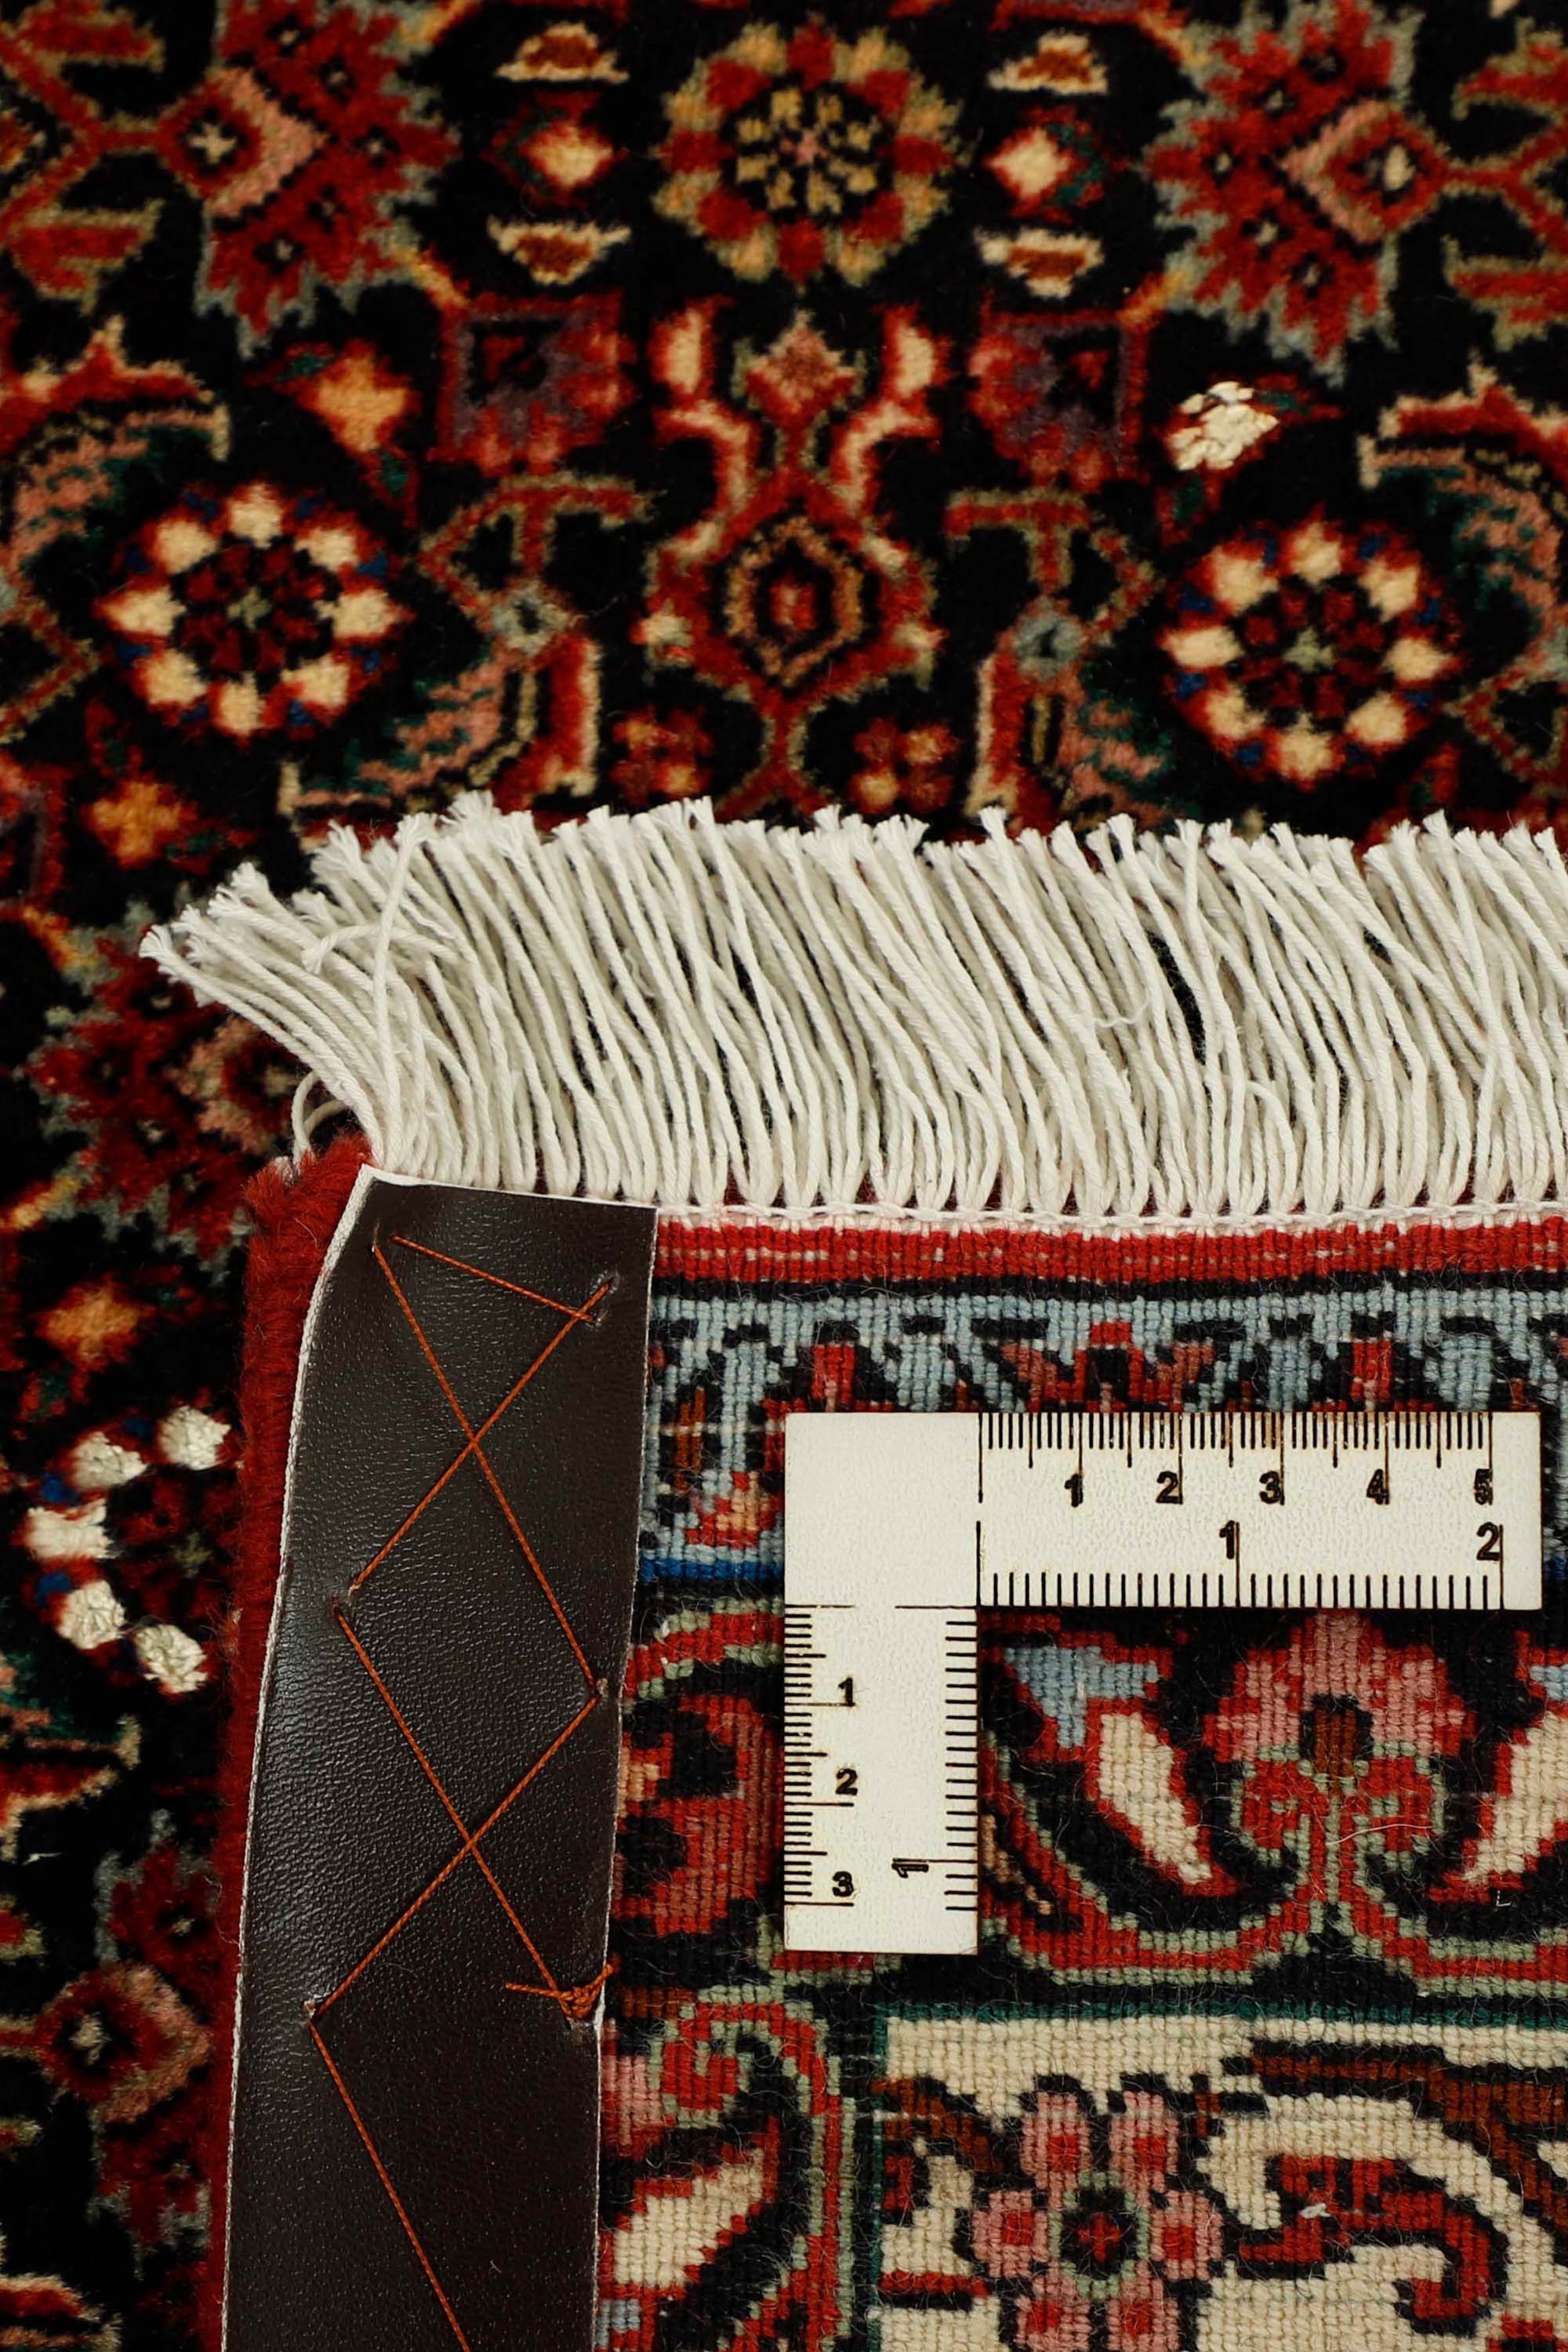 Traditional bordered Bidjar rug in red, cream, and black tones